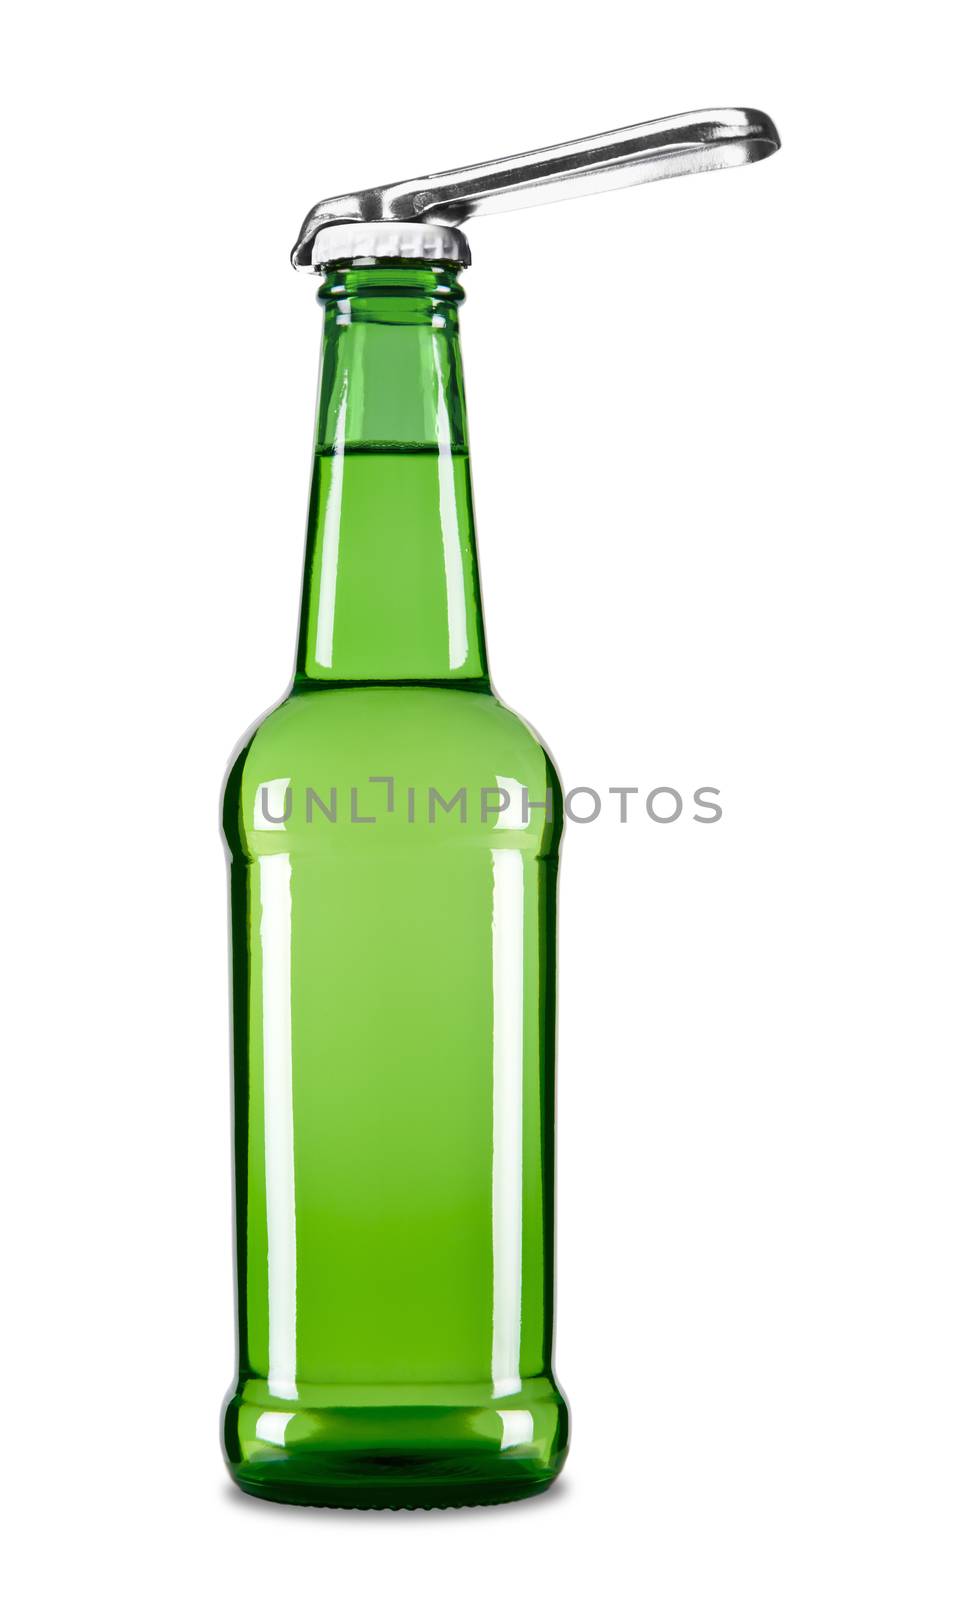 A beer opener on top of a beer bottle.